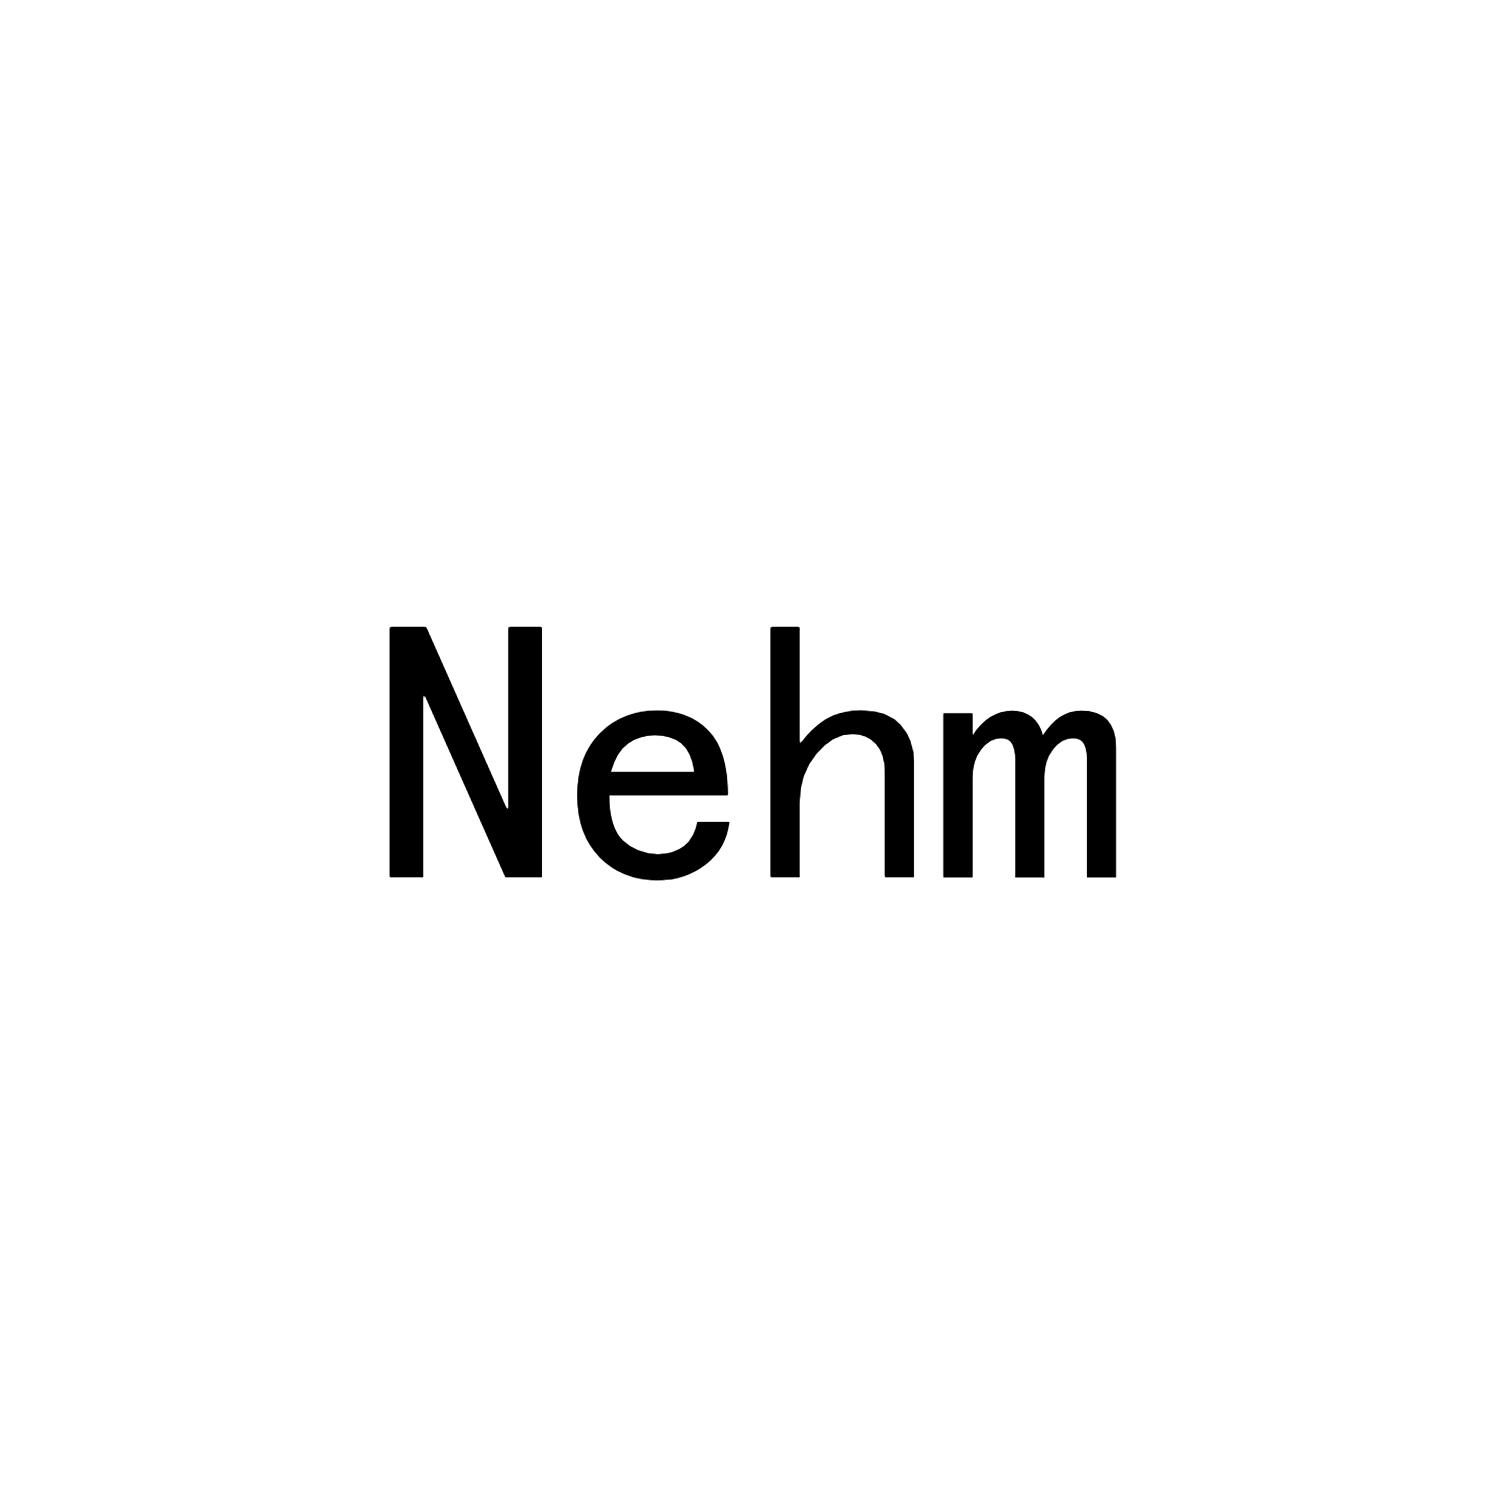 NEHM